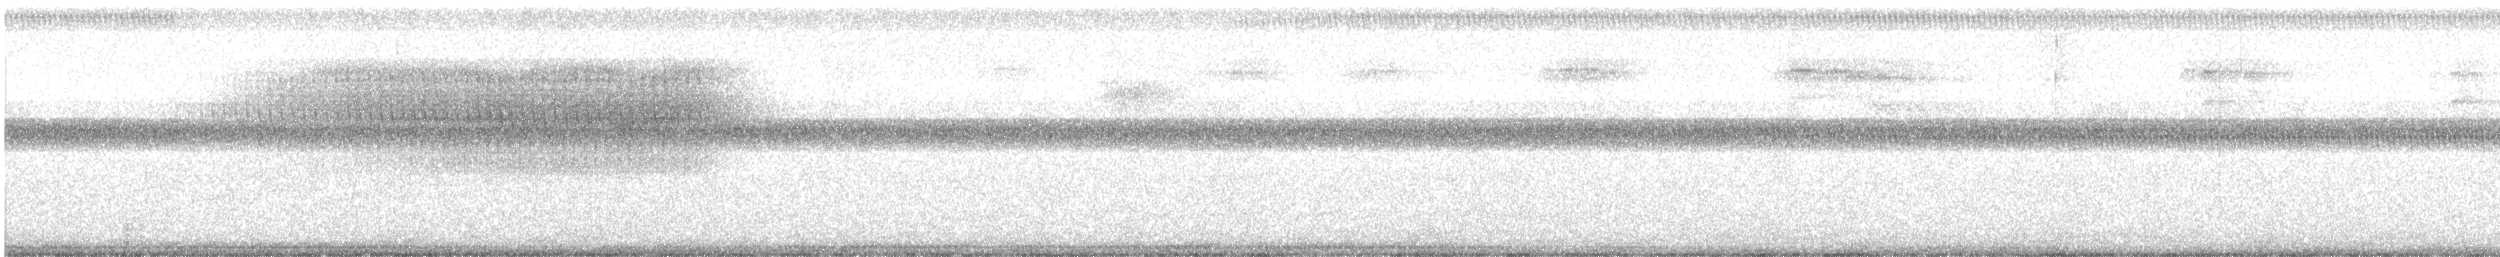 Paruline vermivore - ML246219211